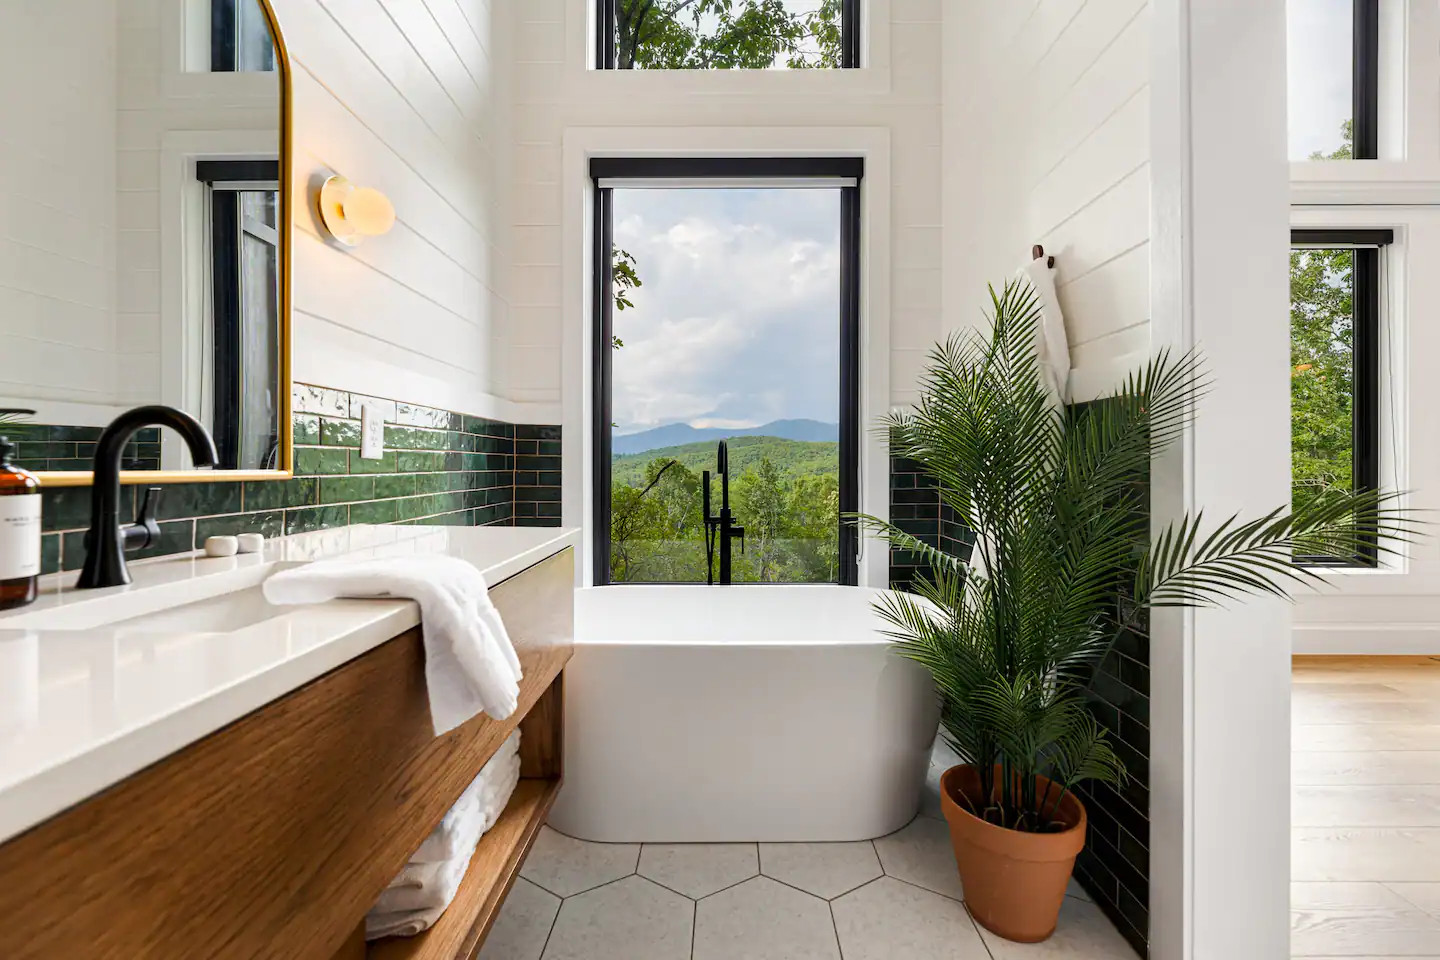 salle de bain design carrelage vert